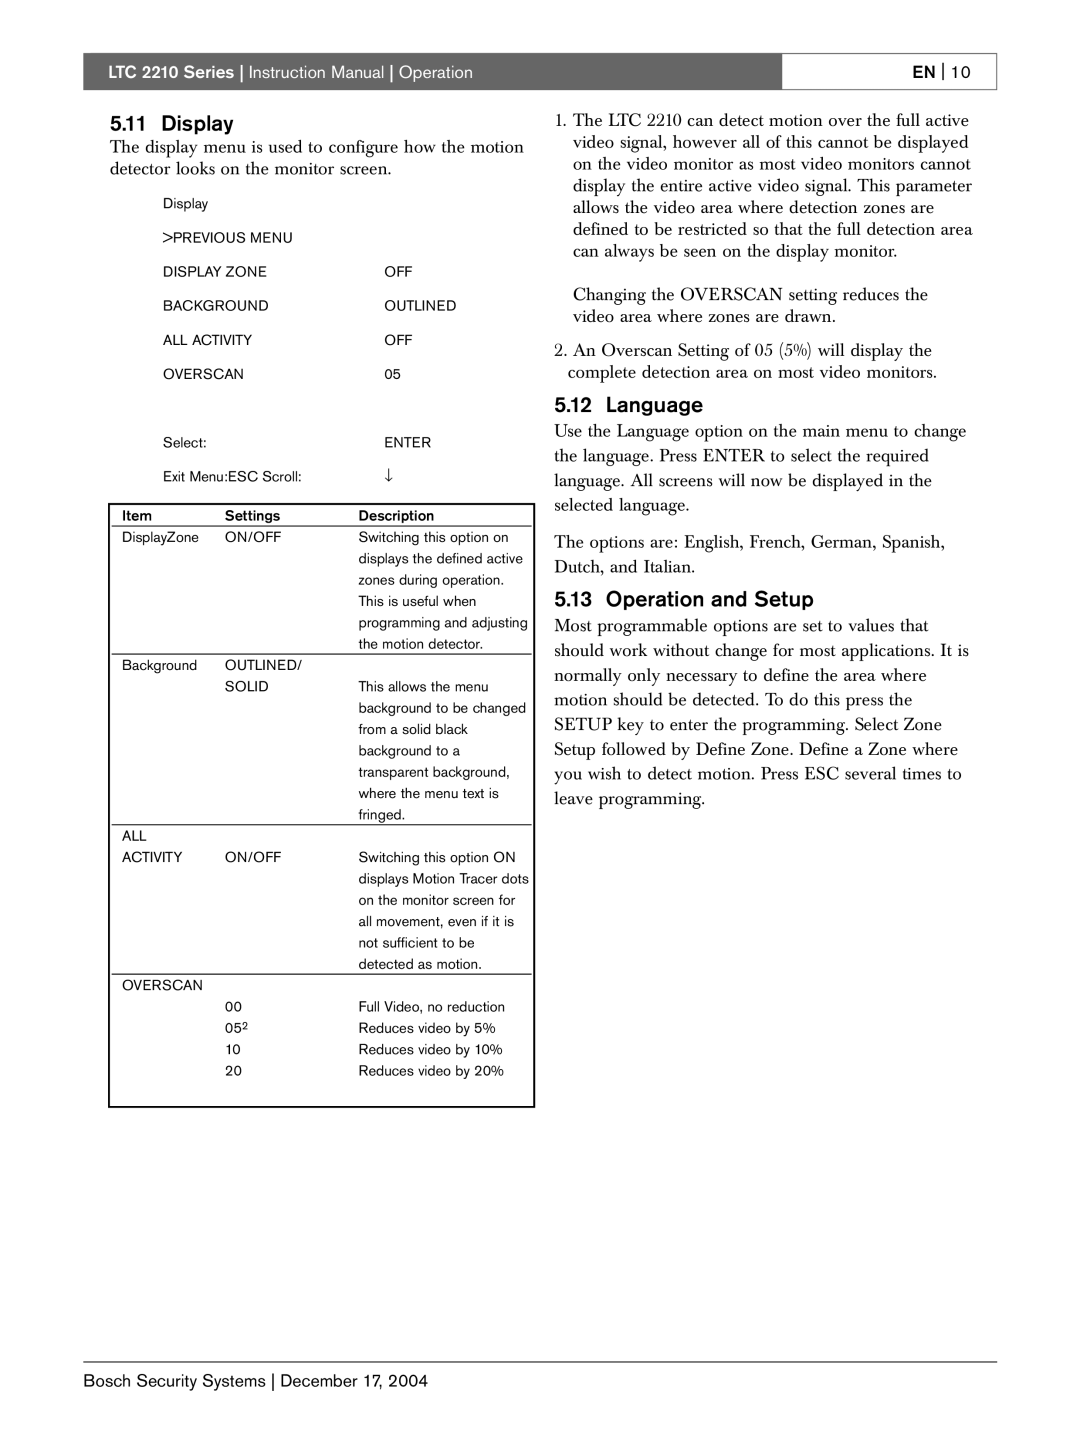 Bosch Appliances LTC 2210 instruction manual Display, Language, Operation and Setup, En 